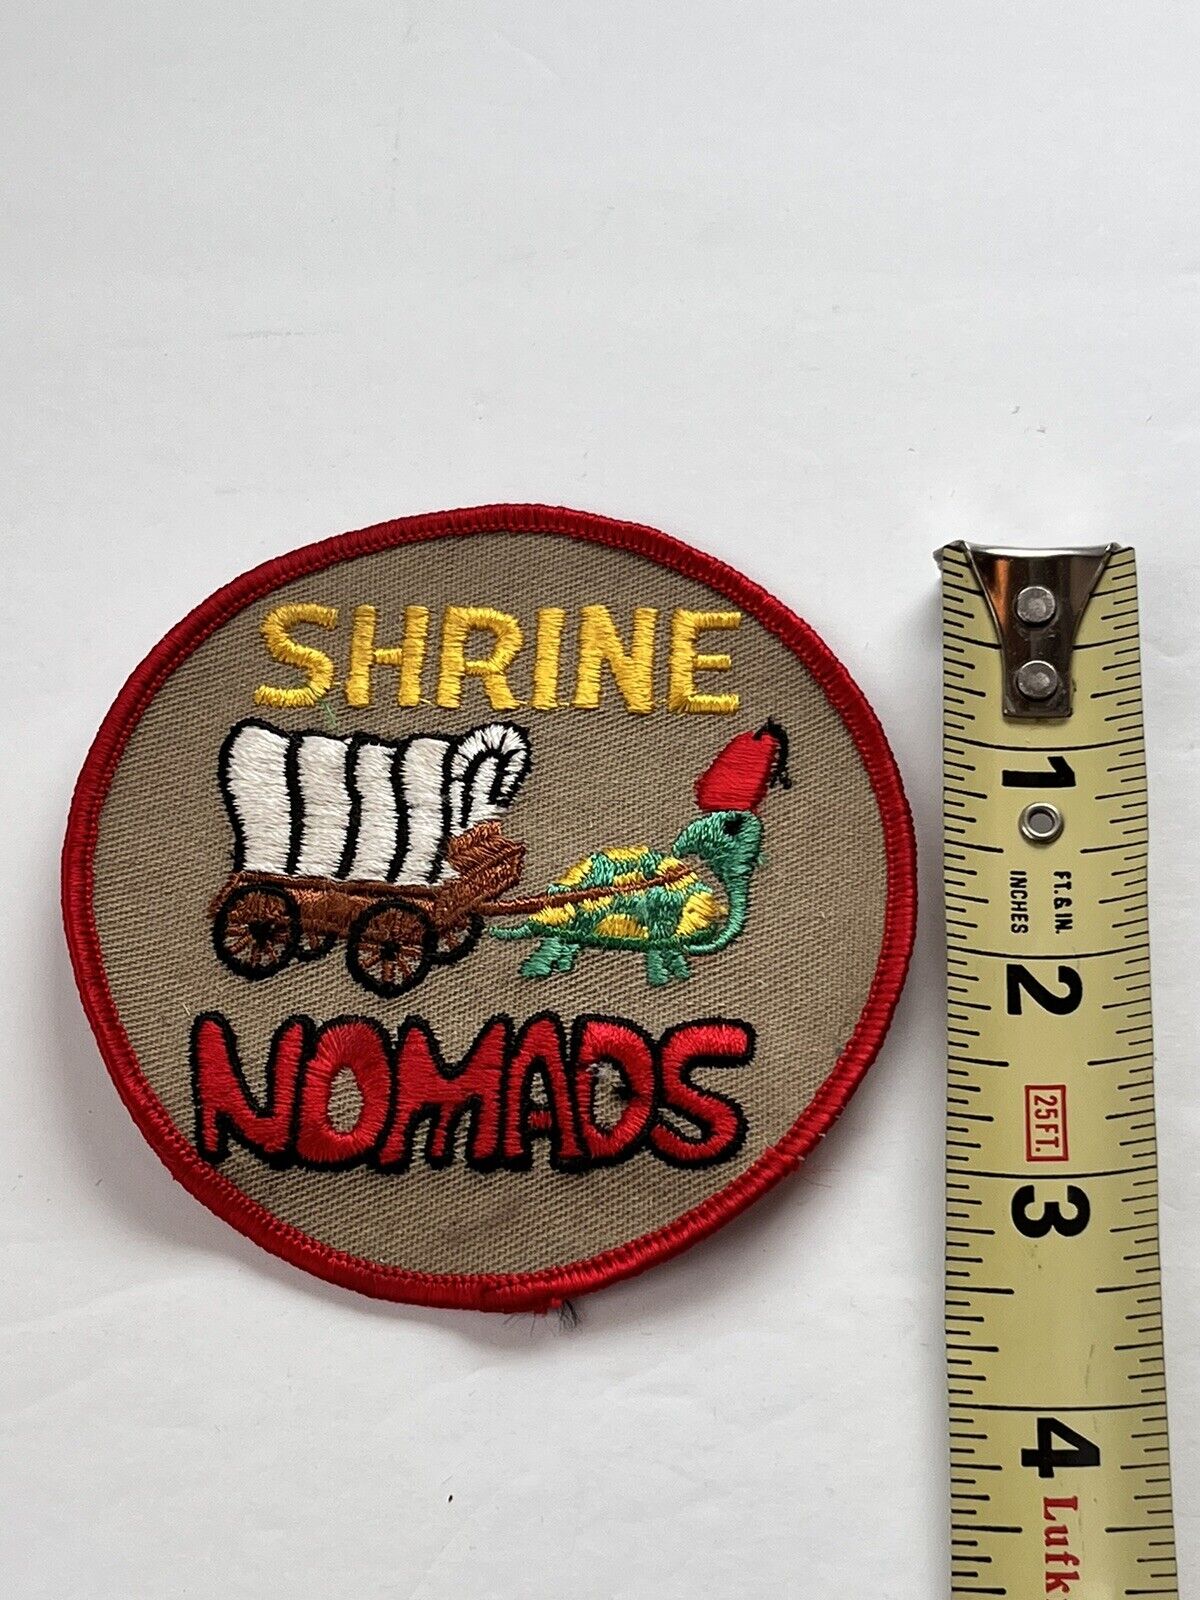 Midian Shrine Nomads Patch 4 inch Shriners Brand New Без бренда - фотография #3